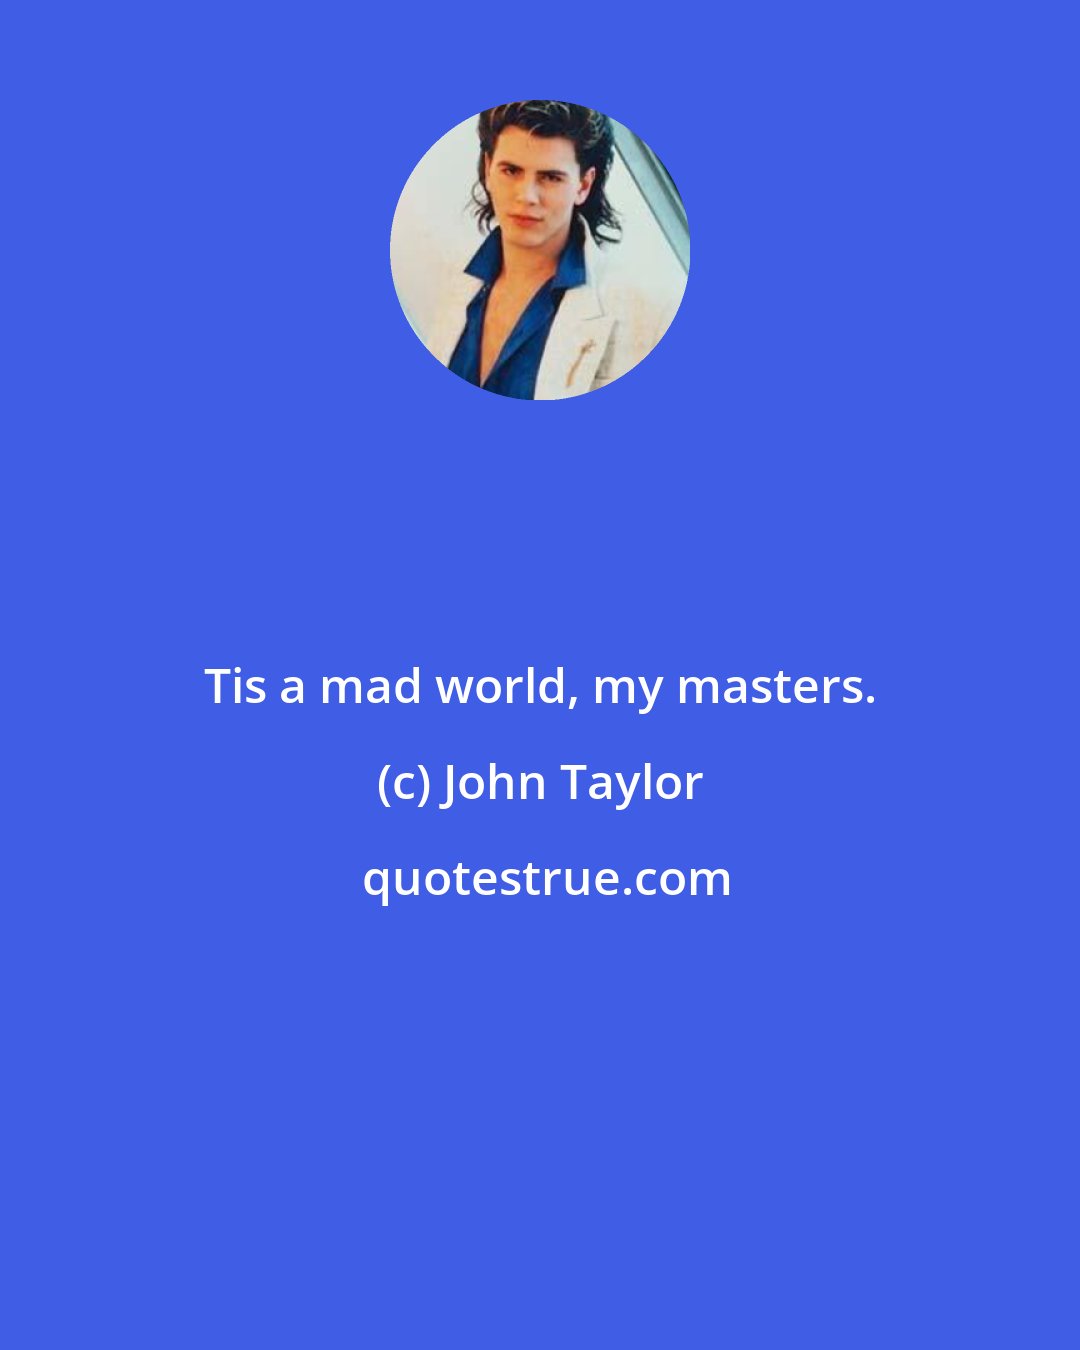 John Taylor: Tis a mad world, my masters.